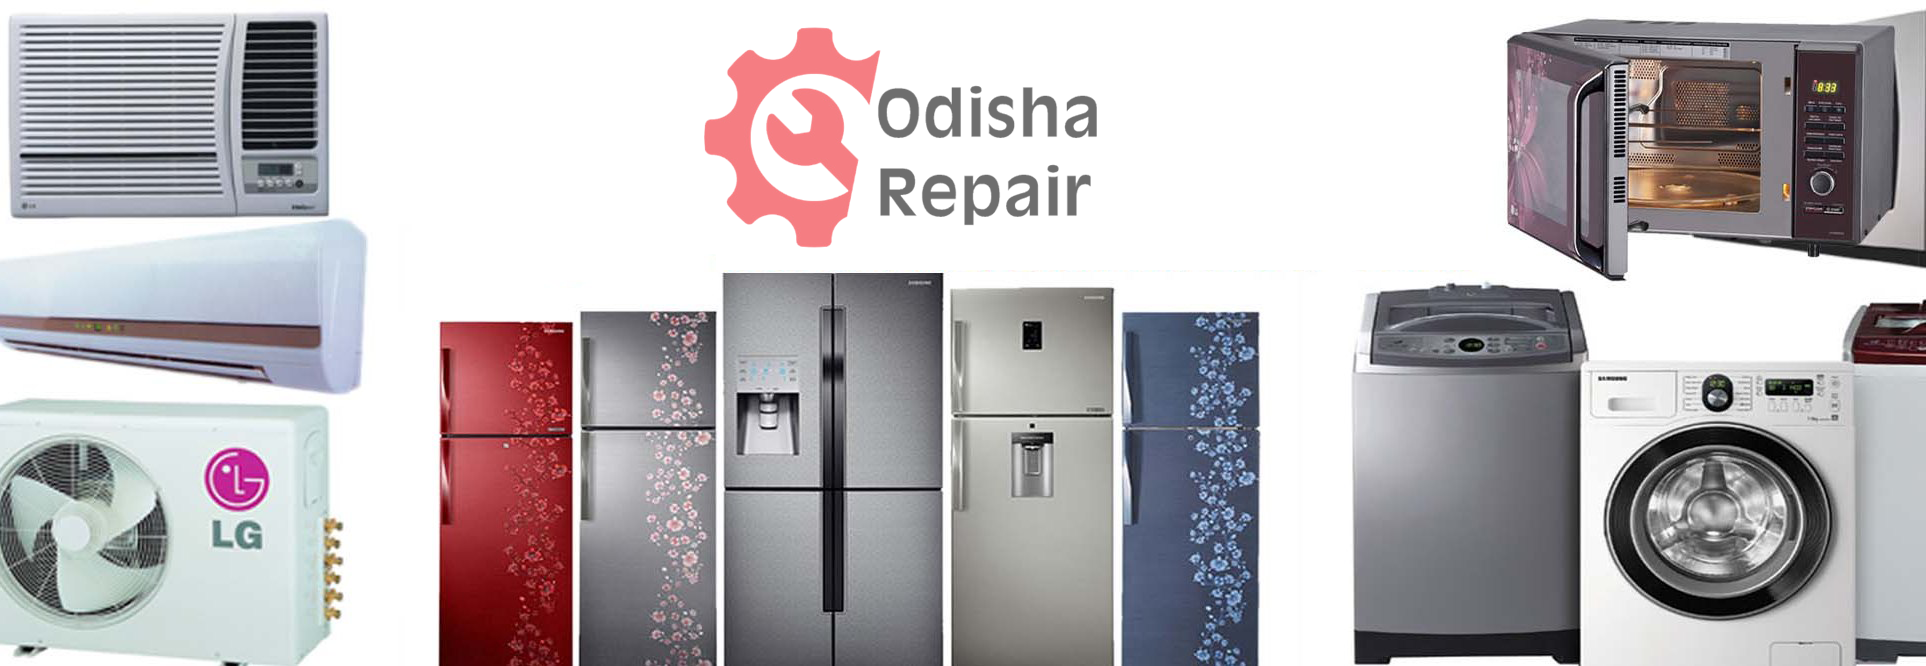 Odisha Repair Home Appliances Repairing in Bhubaneswar and Cuttack  AC, Refrigerator & Home Appliances repairing in Bhubaneswar & Cuttack Odisha Repair - AC, Refrigerator & Home Appliances repairing in Bhubaneswar & Cuttack AC, Refrigerator & Home Appliances repairing in Bhubaneswar & Cuttack